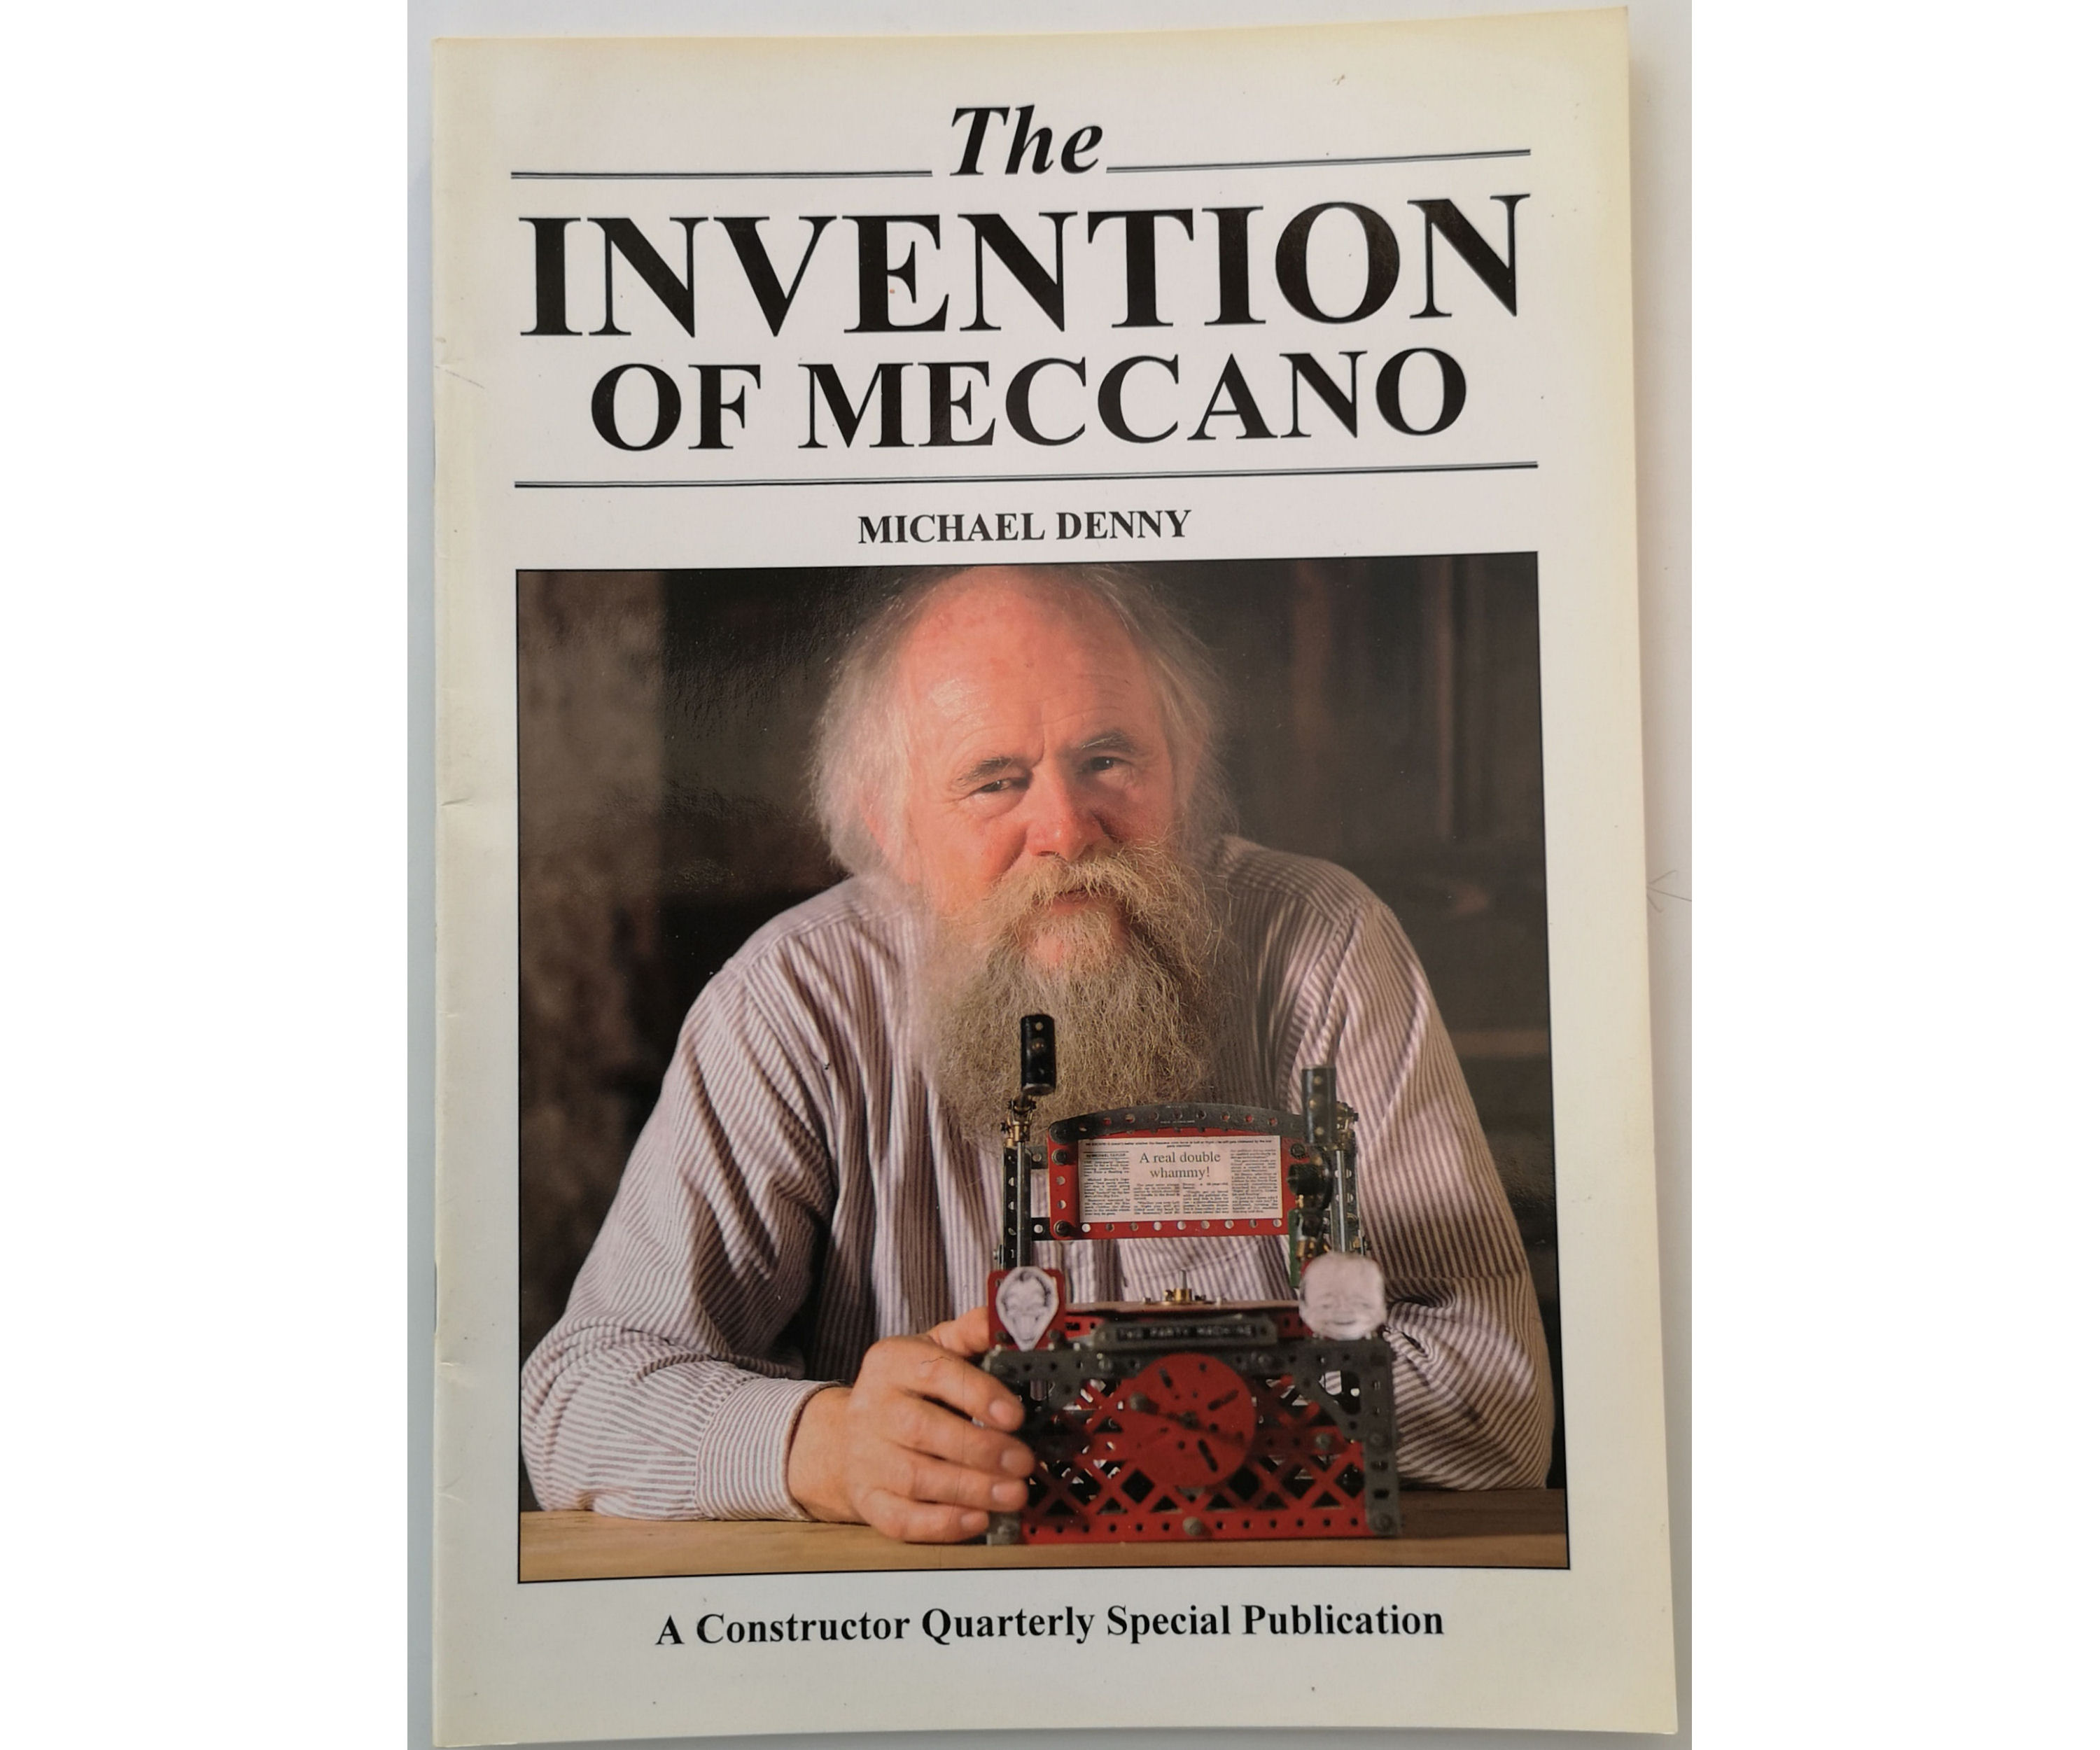 LOT 0190 - THE INVENTION OF MECCANO